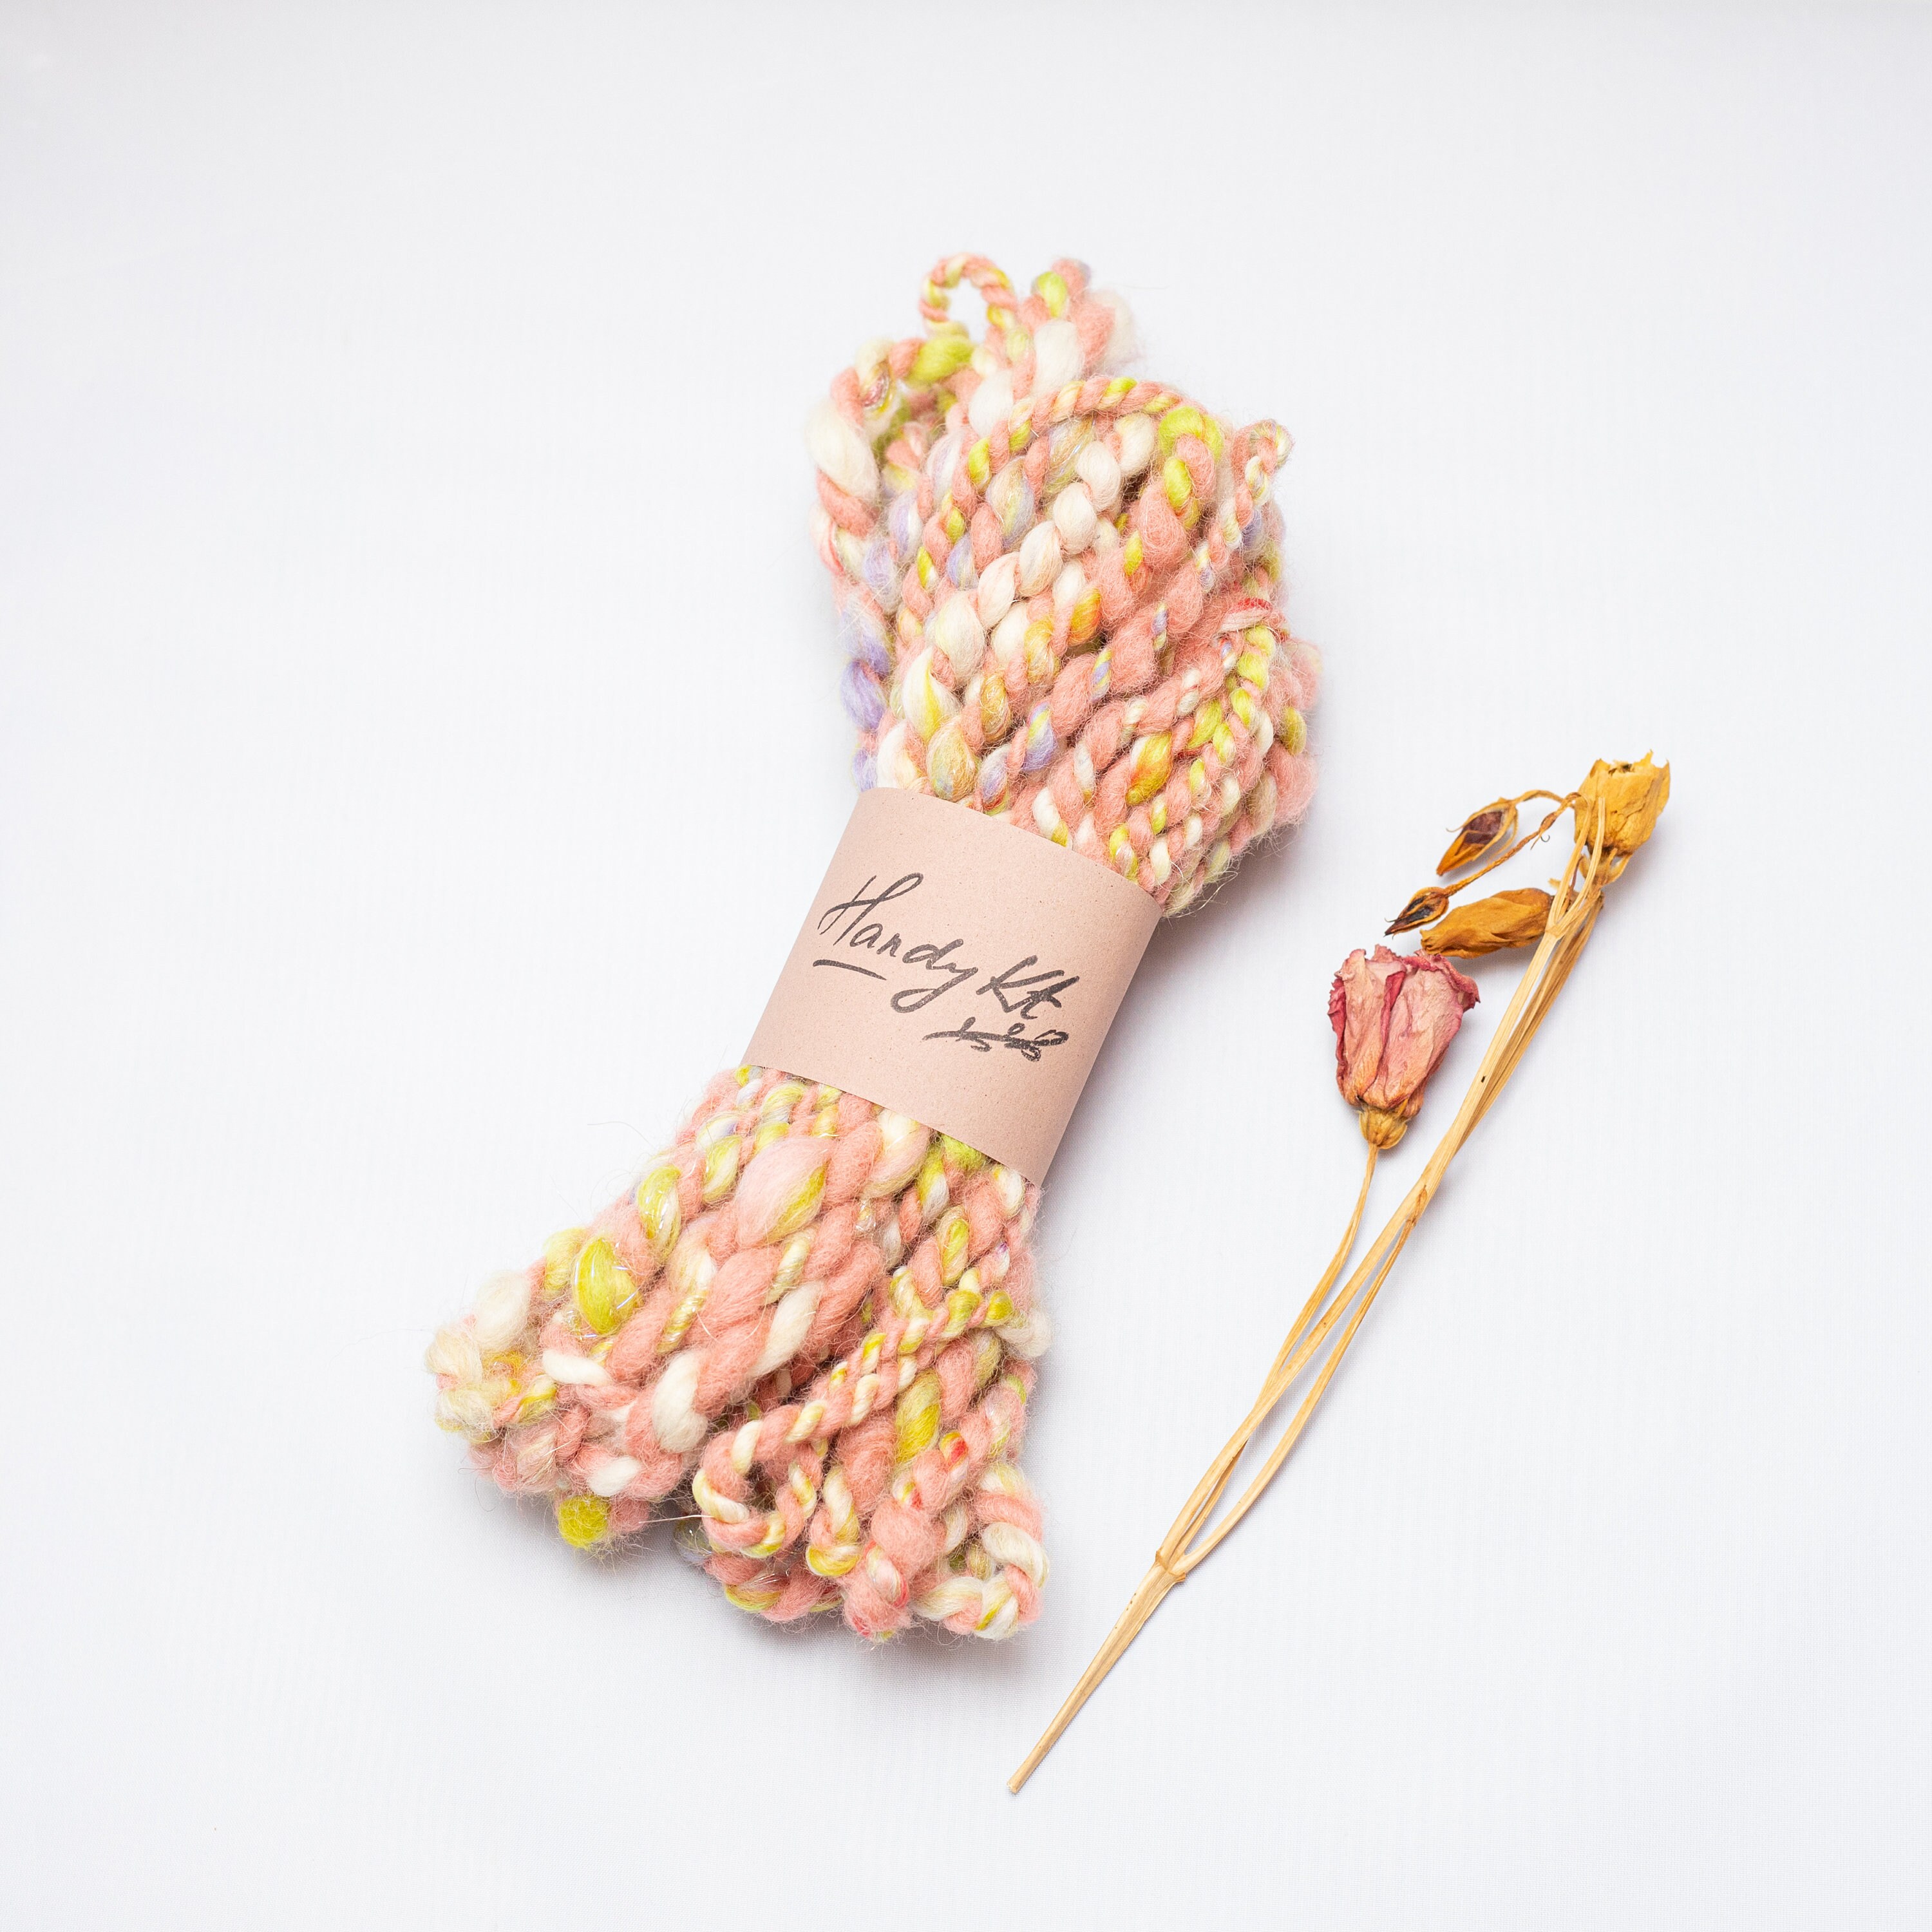 Blue Weaving pink and mustard wool handspun art yarn bundle textile and art crafts fiber pack.